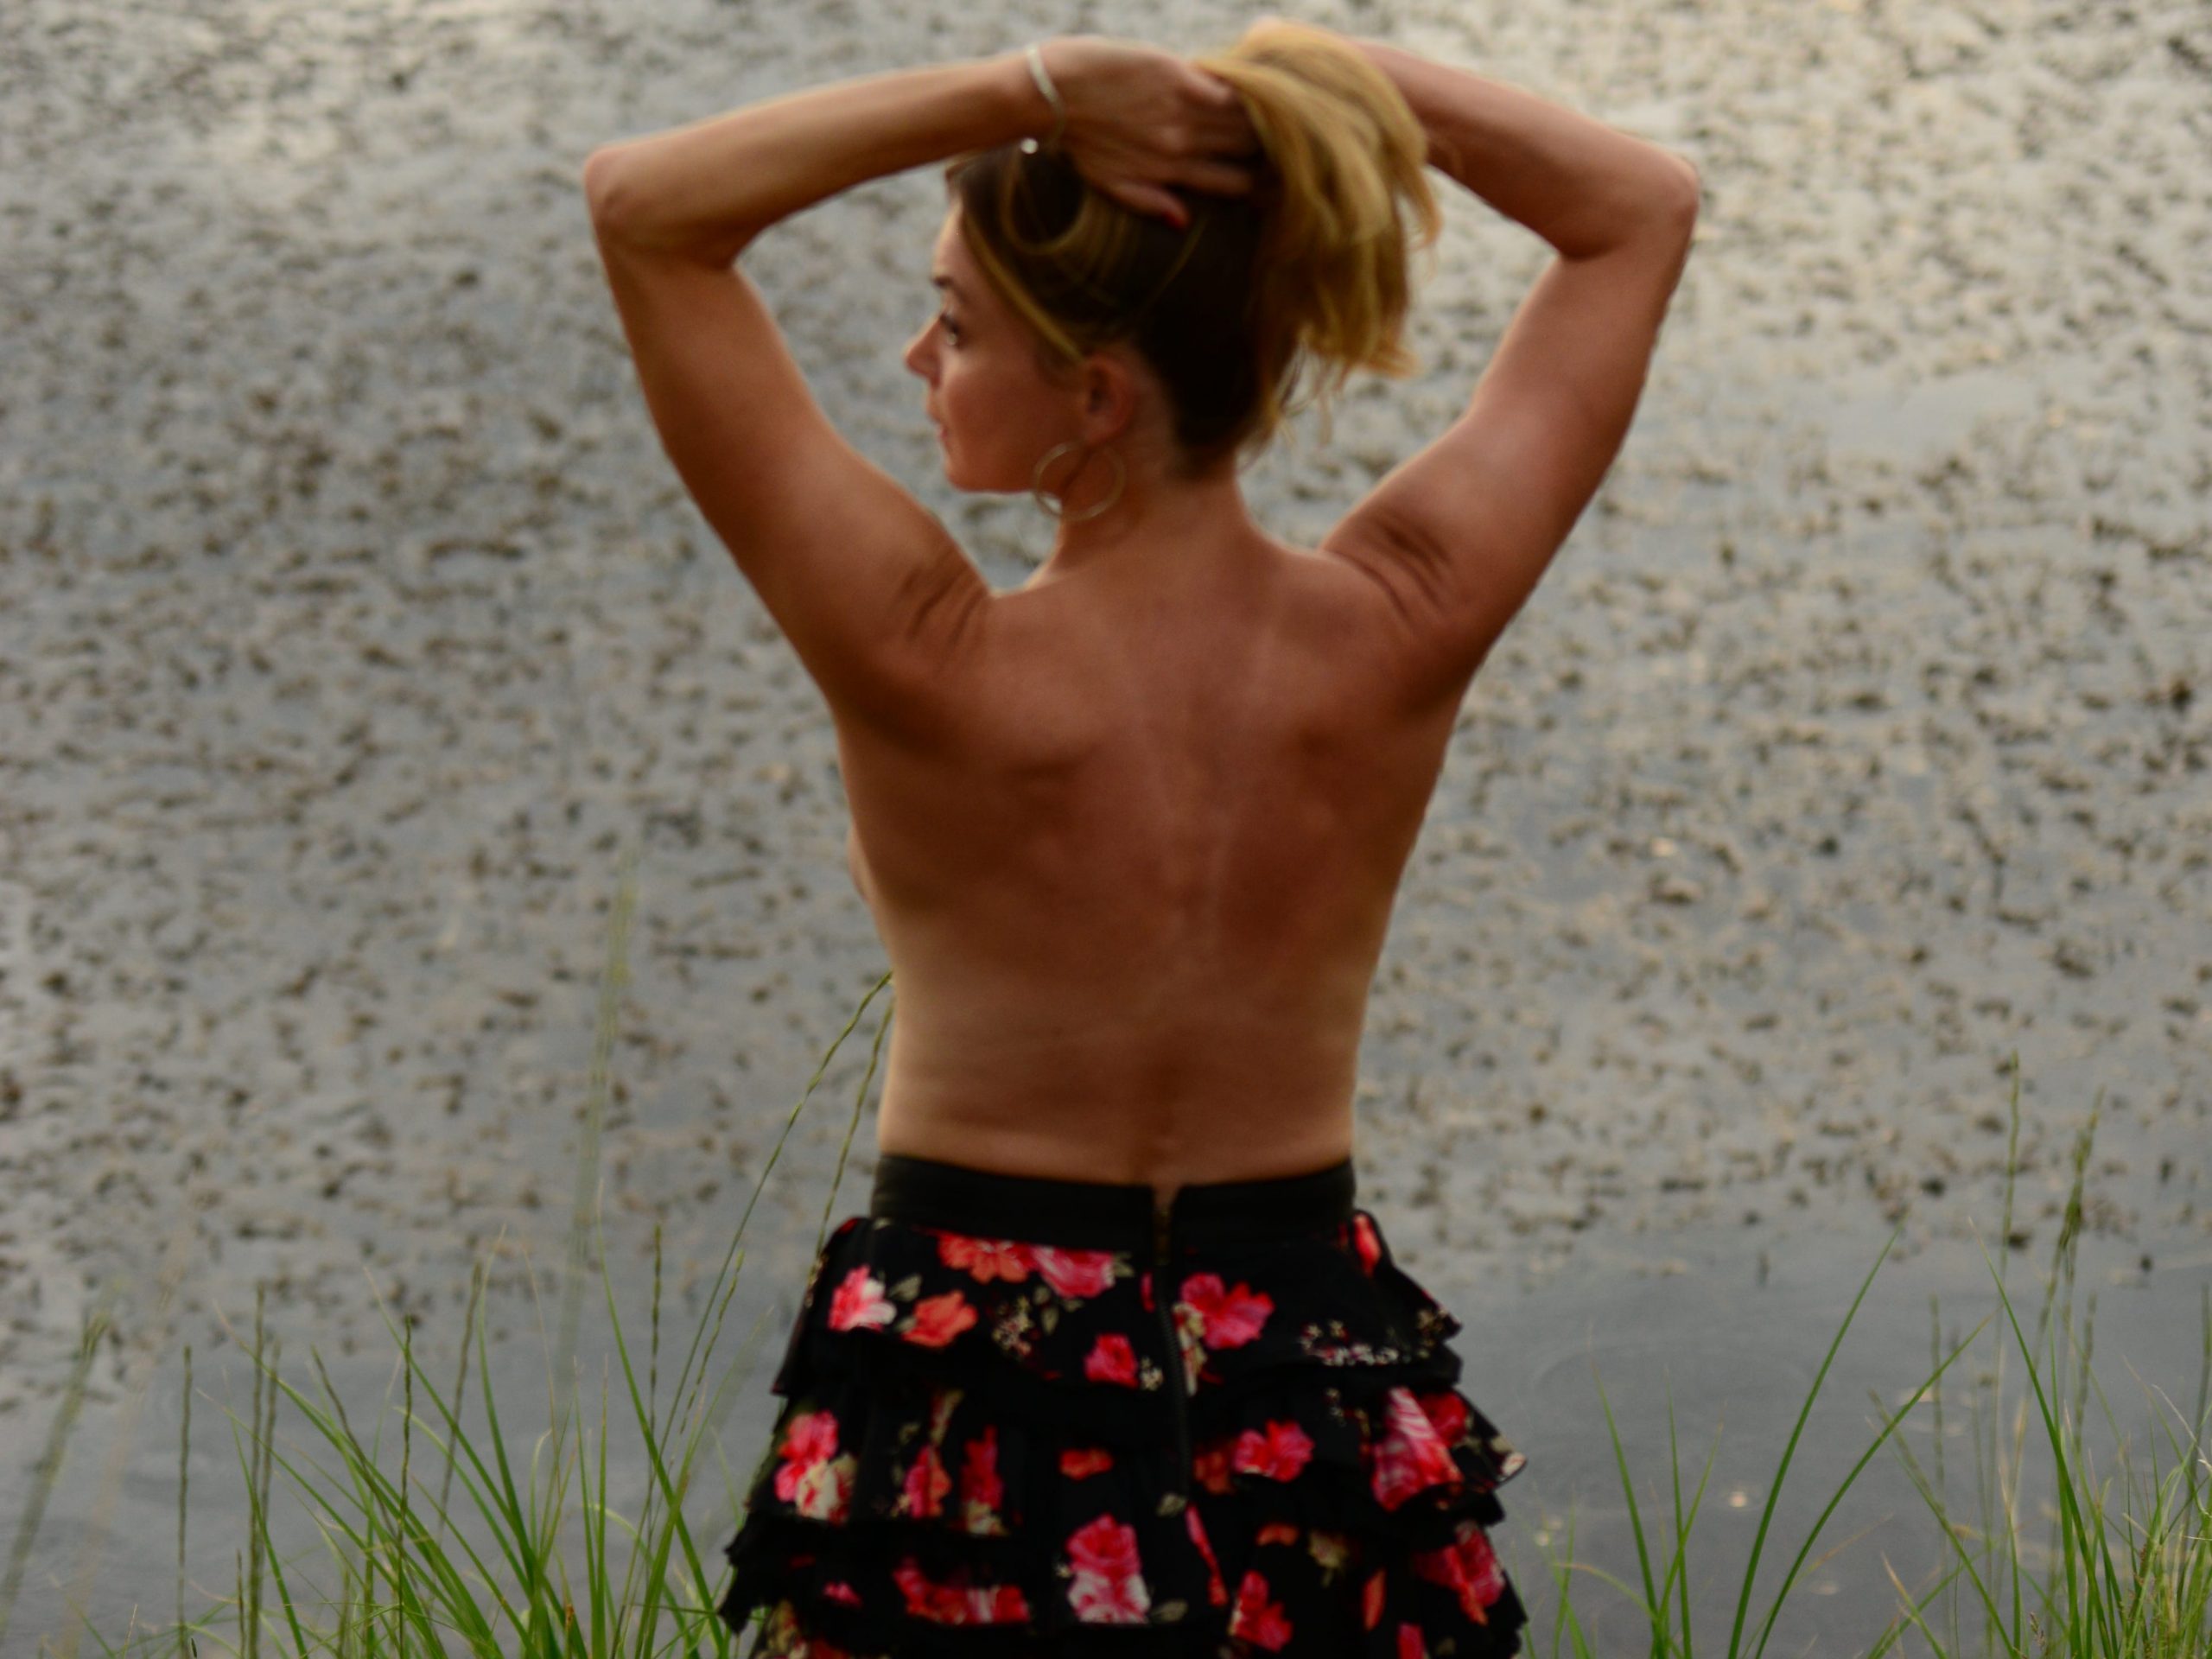 Amanda posing by a lake